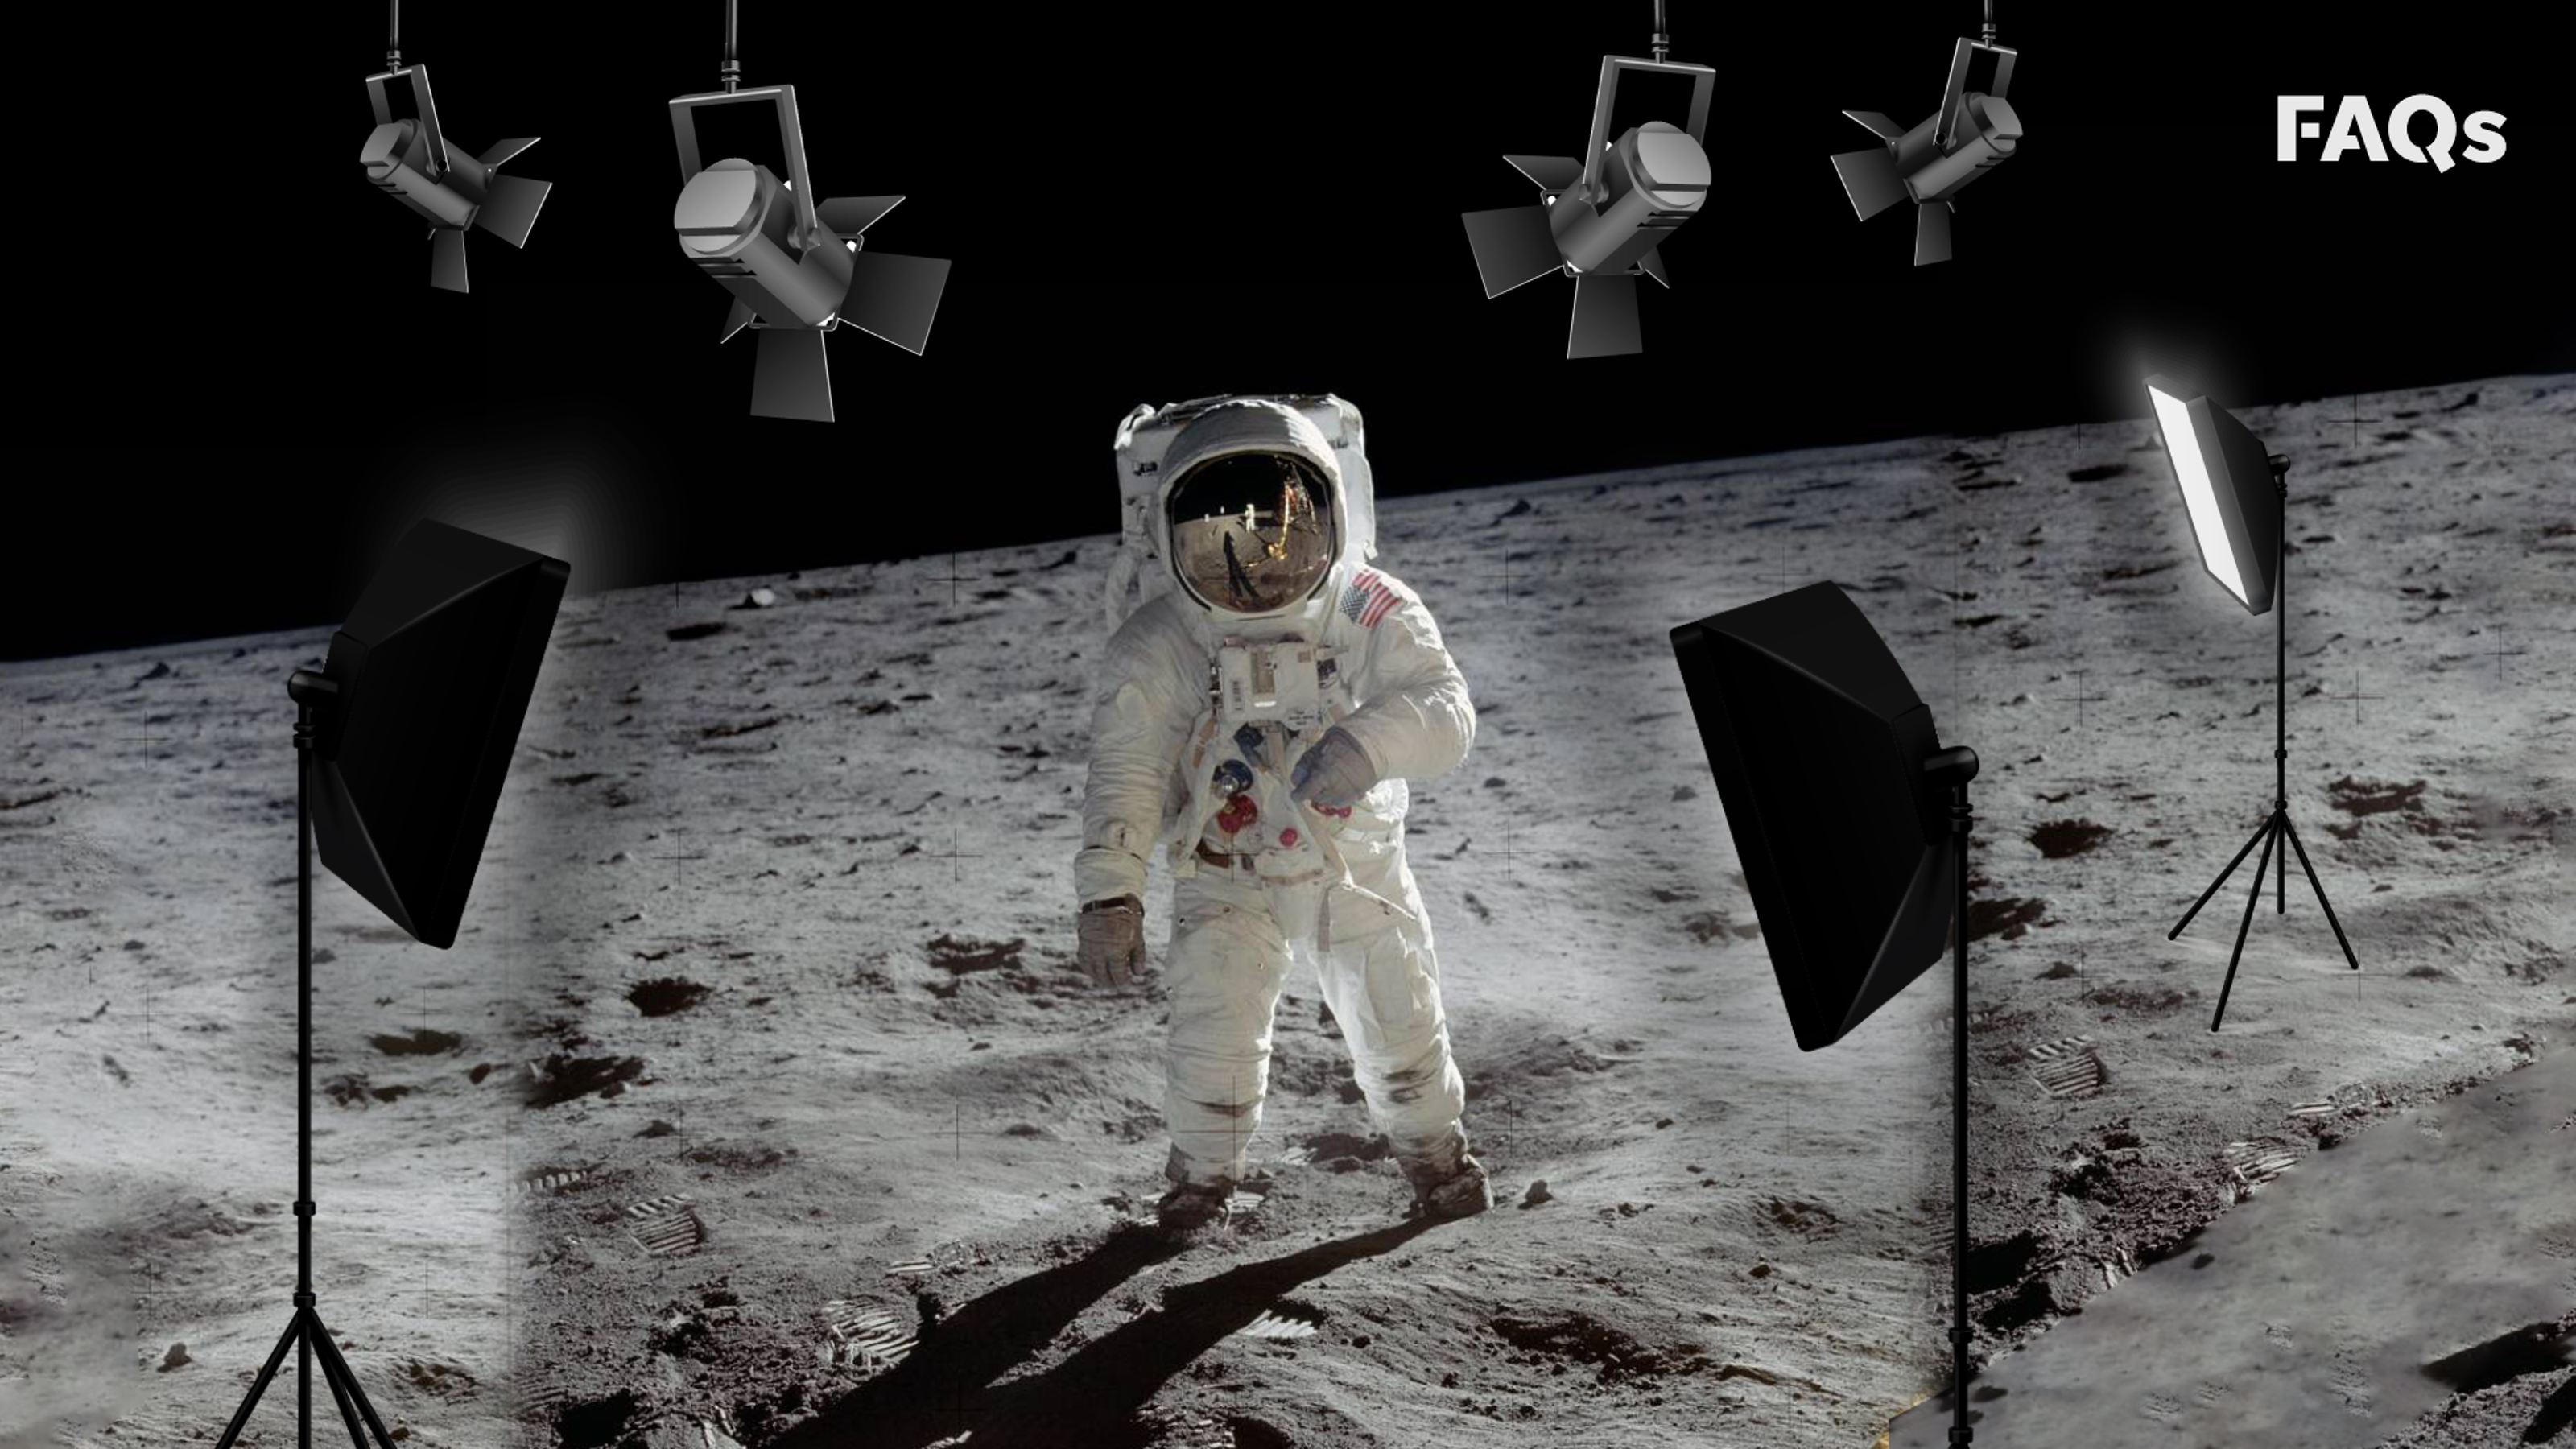 Moon landing conspiracy theories, exposed